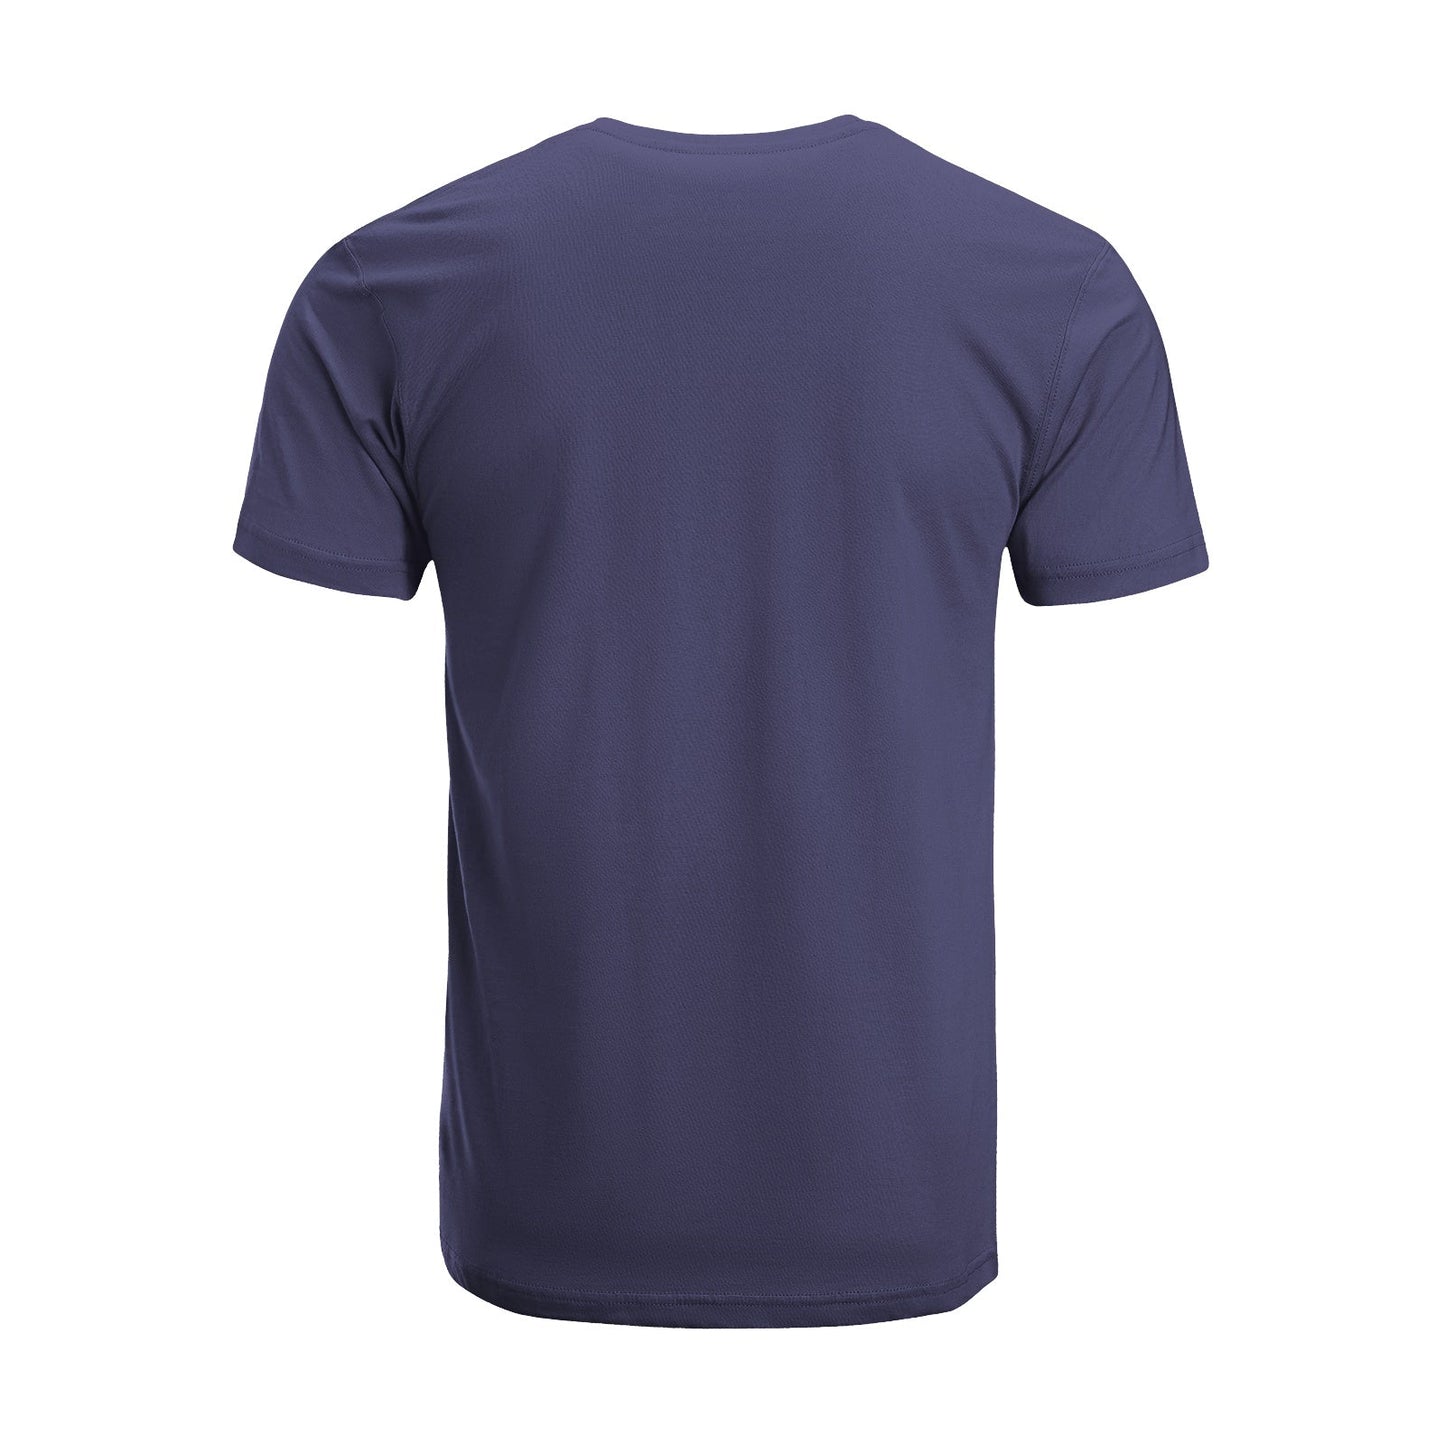 Unisex Short Sleeve Crew Neck Cotton Jersey T-Shirt MOM 13